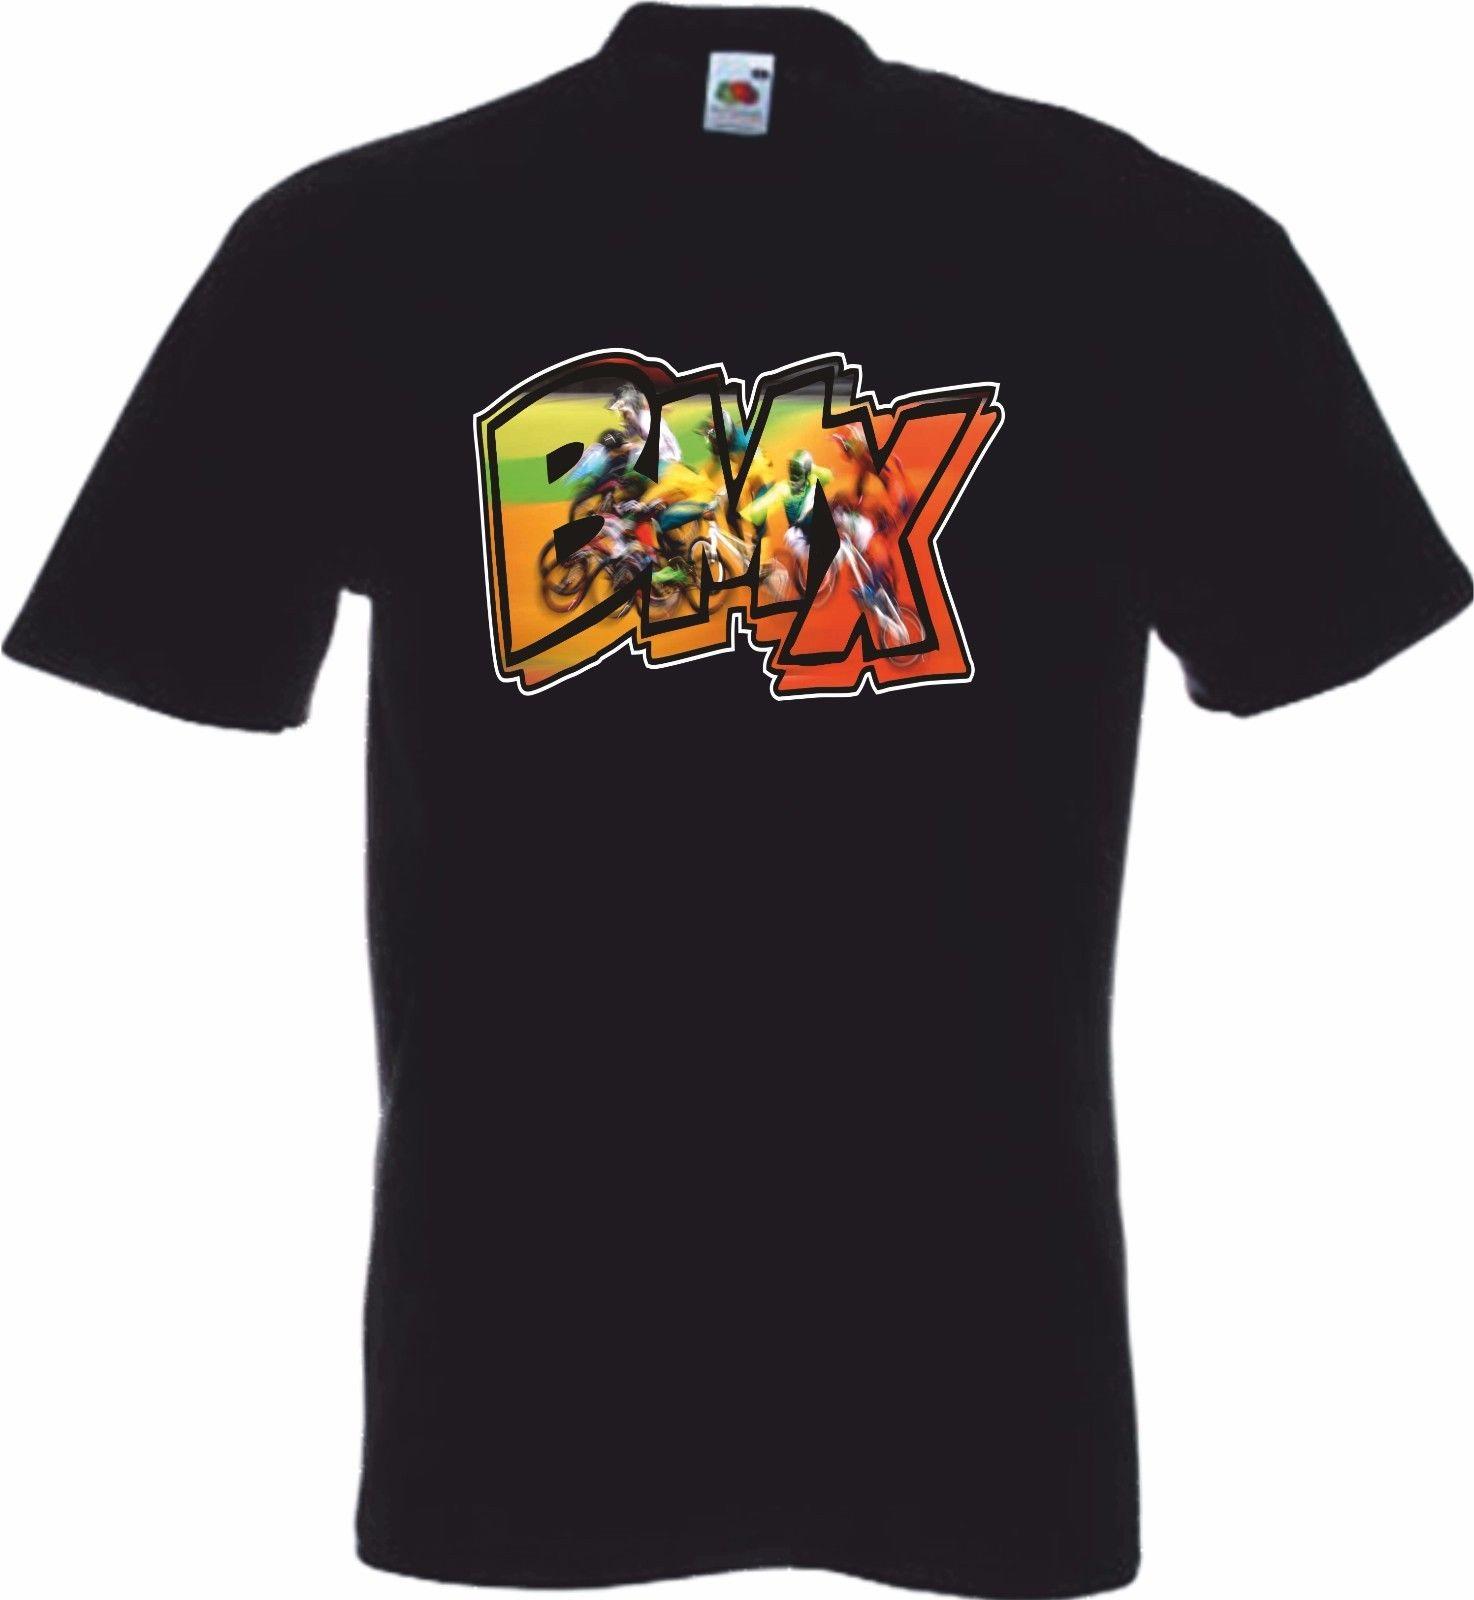 Cool BMX Logo - Bmx Race Blur Logo Retro T Shirt Racing Cycling Bike Stunt Biker